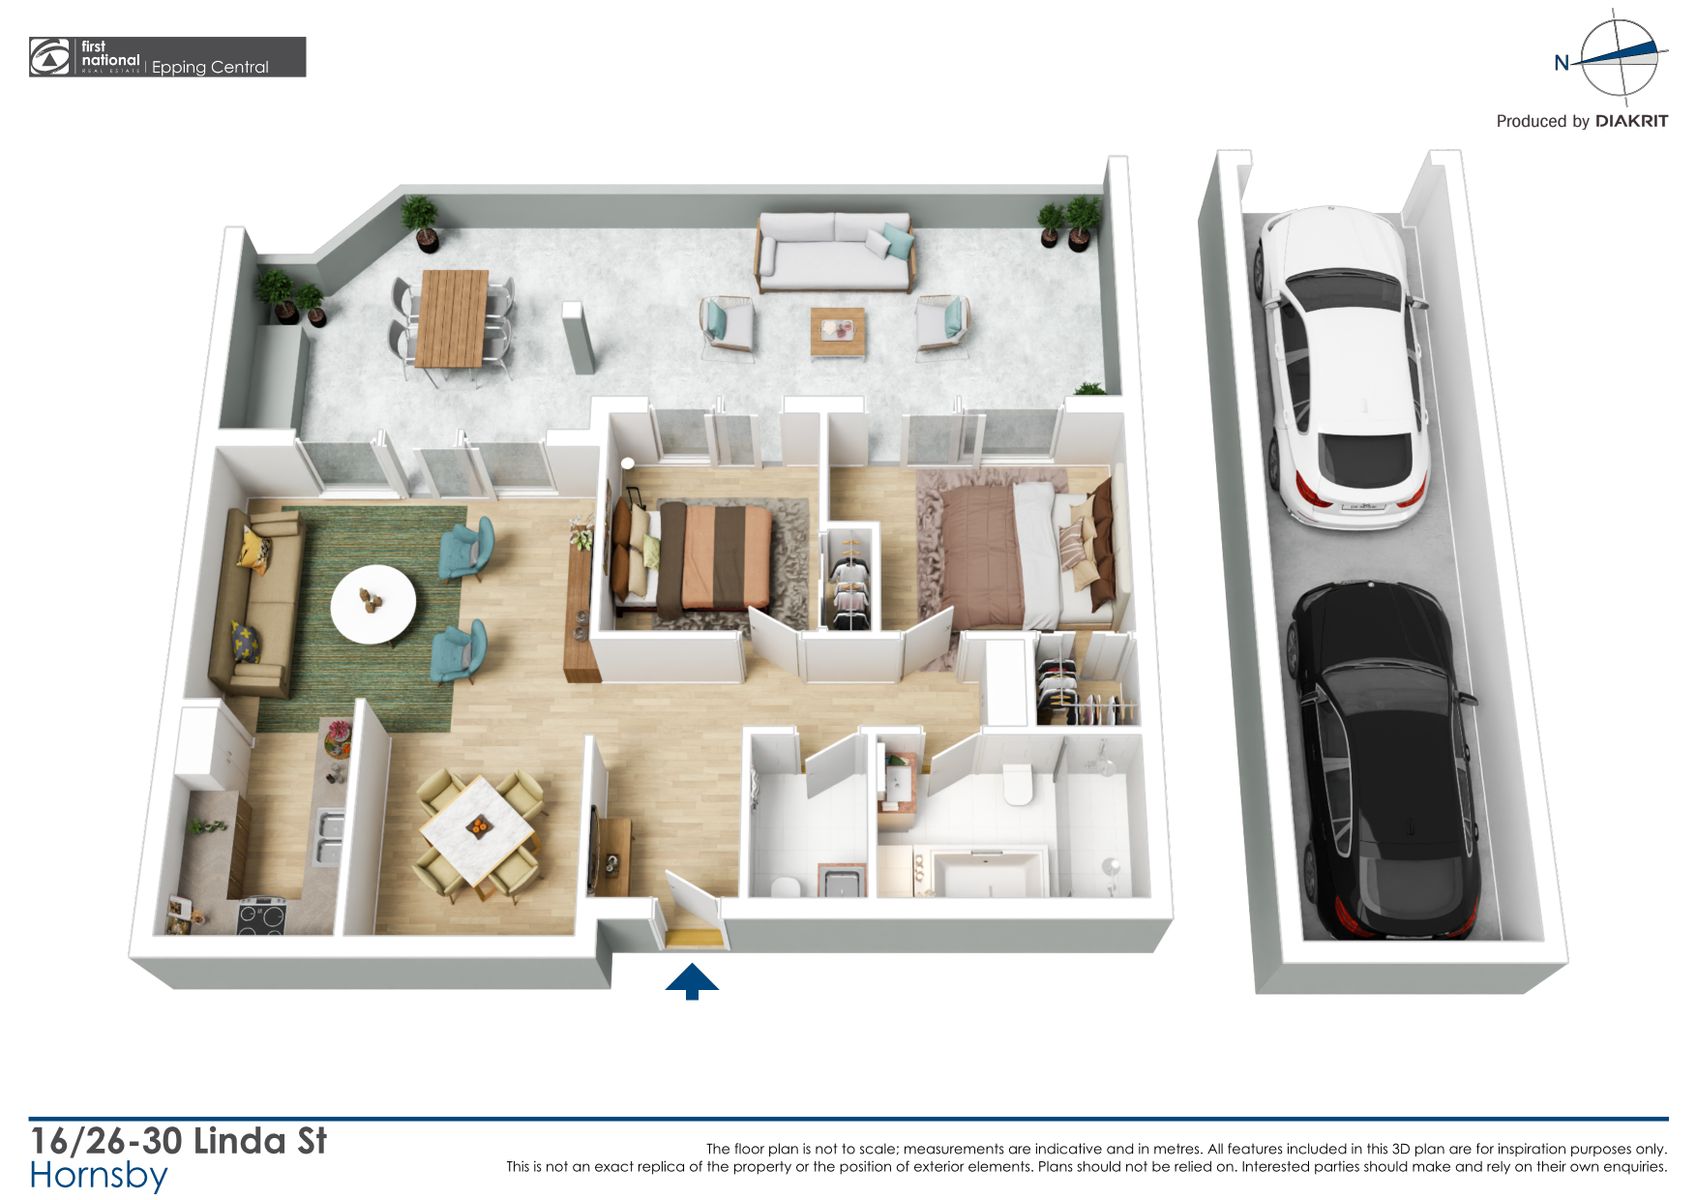 16 26 Linda St Hornsby Floorplan 3D web